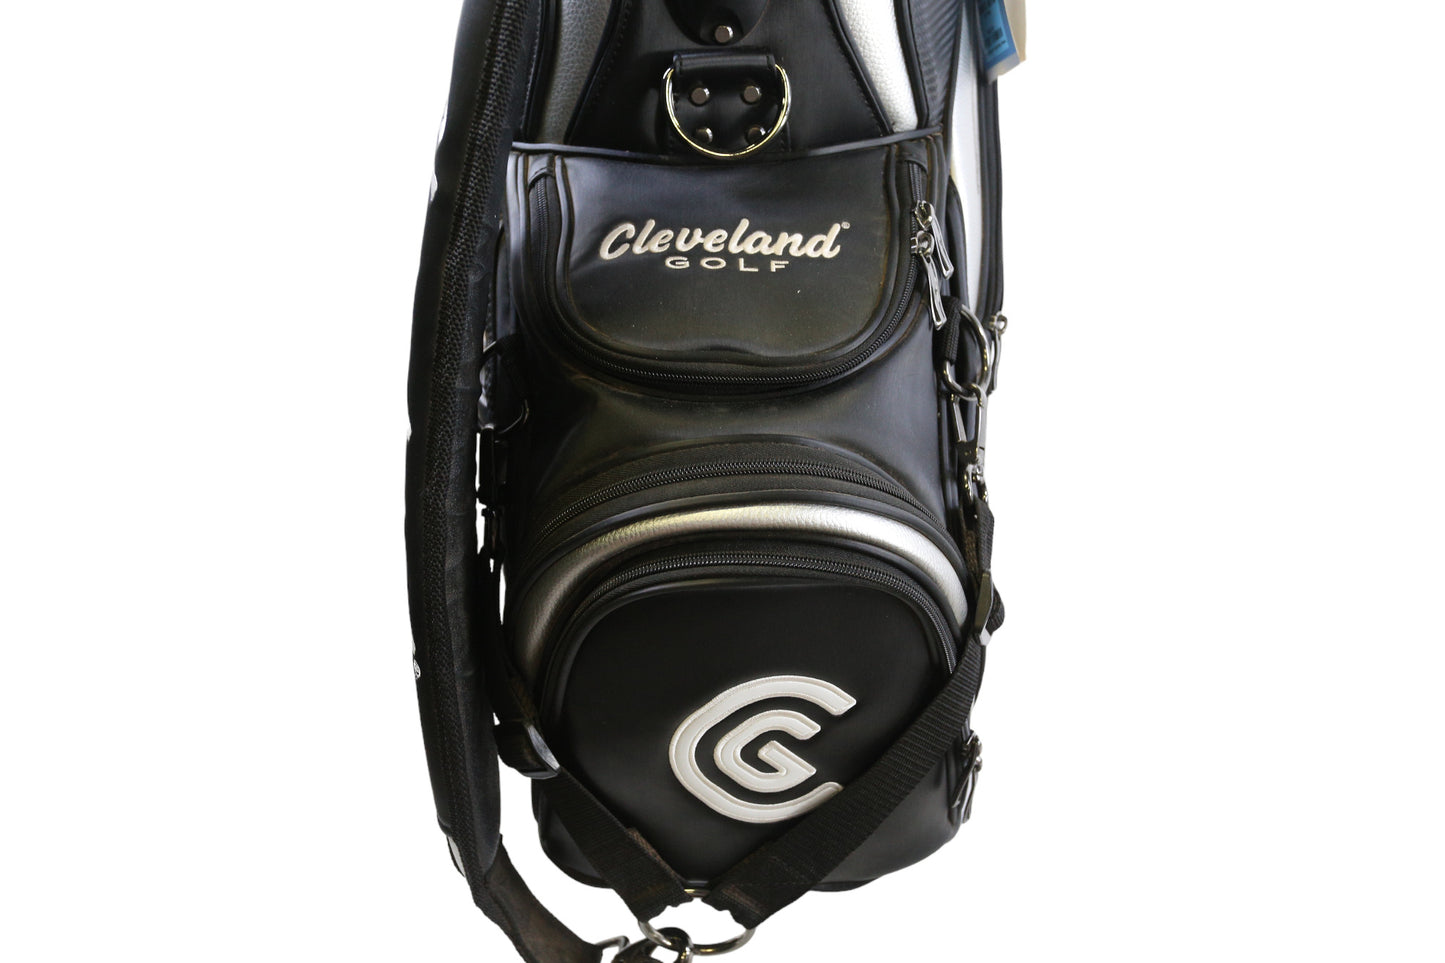 Cleveland Black/Silver Staff Bag 6 Dividers 7 Pockets Rain Cover